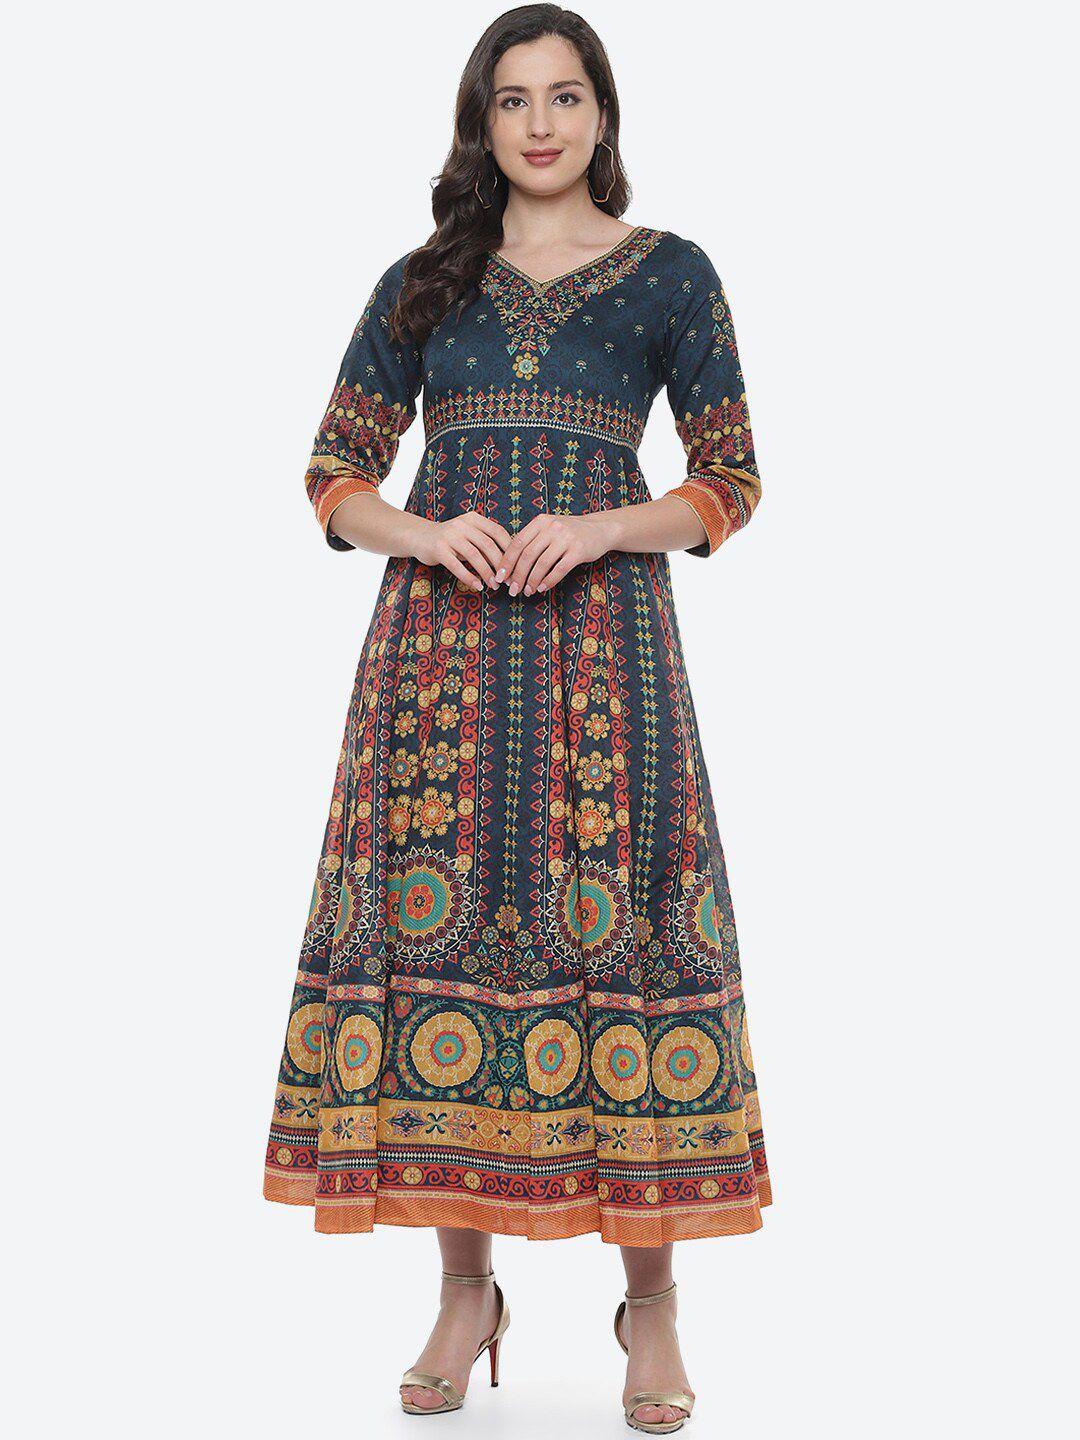 biba teal blue & brown ethnic motifs ethnic maxi dress